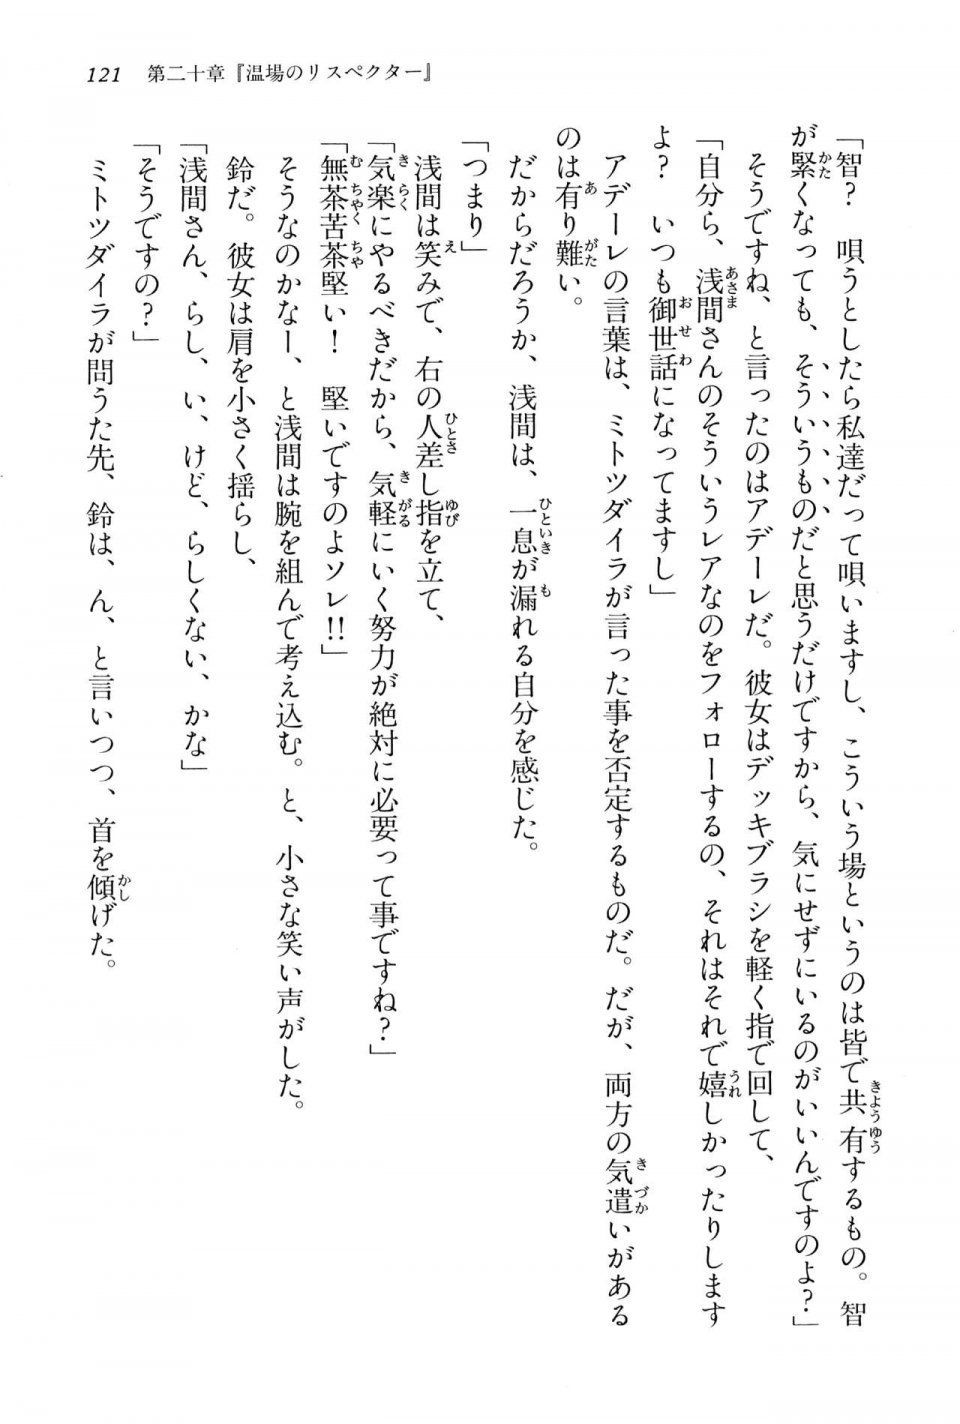 Kyoukai Senjou no Horizon BD Special Mininovel Vol 4(2B) - Photo #125